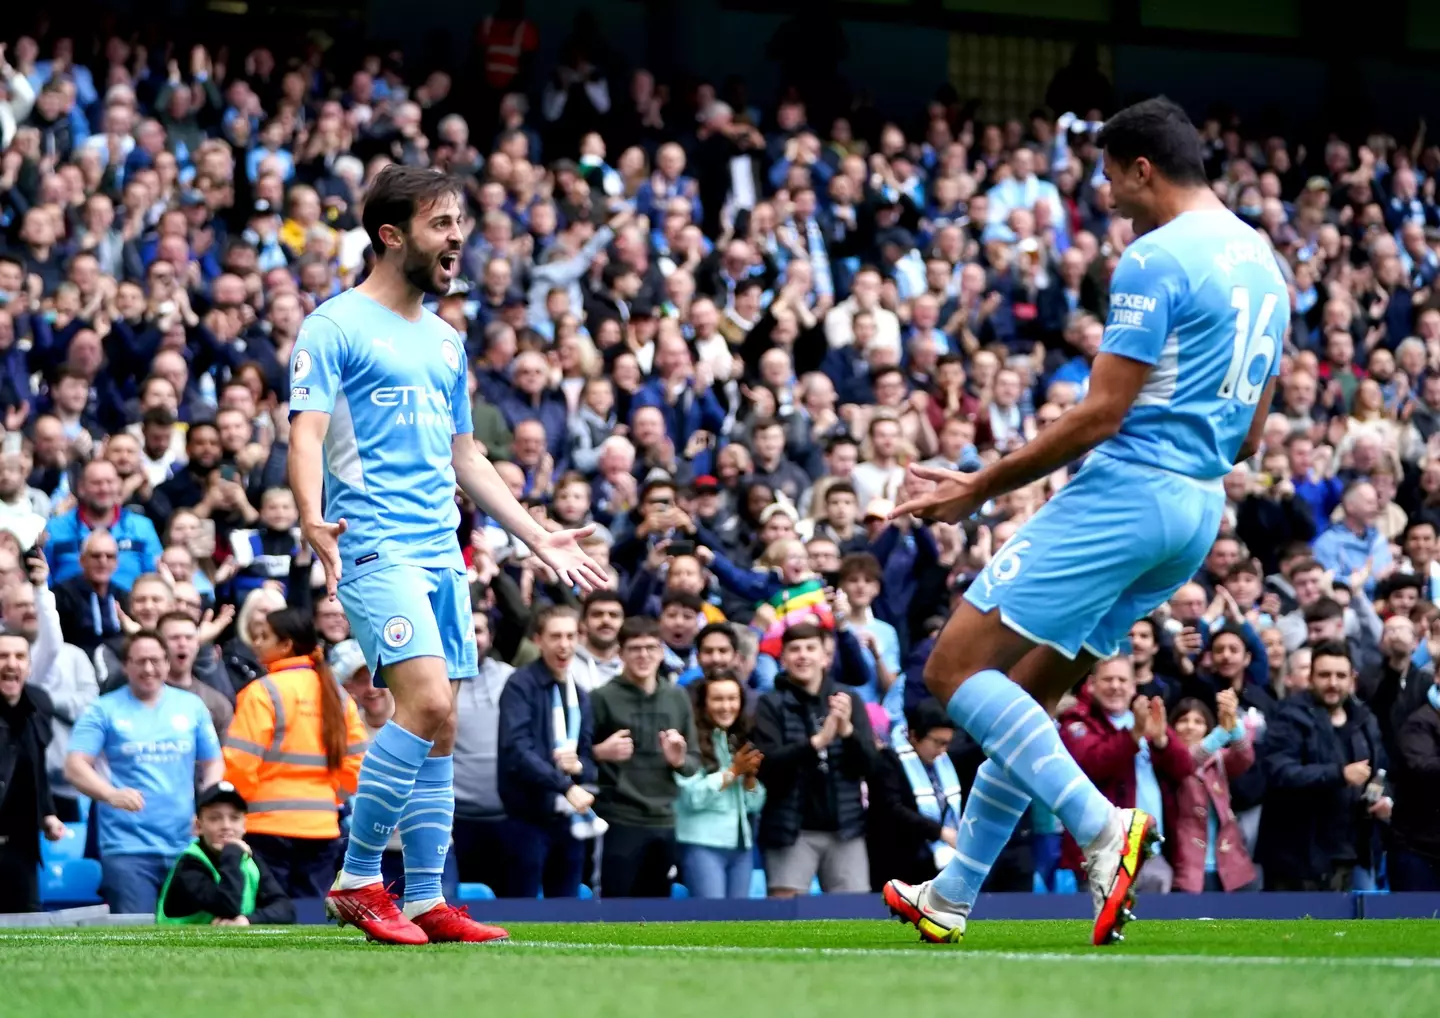 Bernardo Silva and Rodri celebrate after City take the lead against Burnley (PA Images / Alamy)